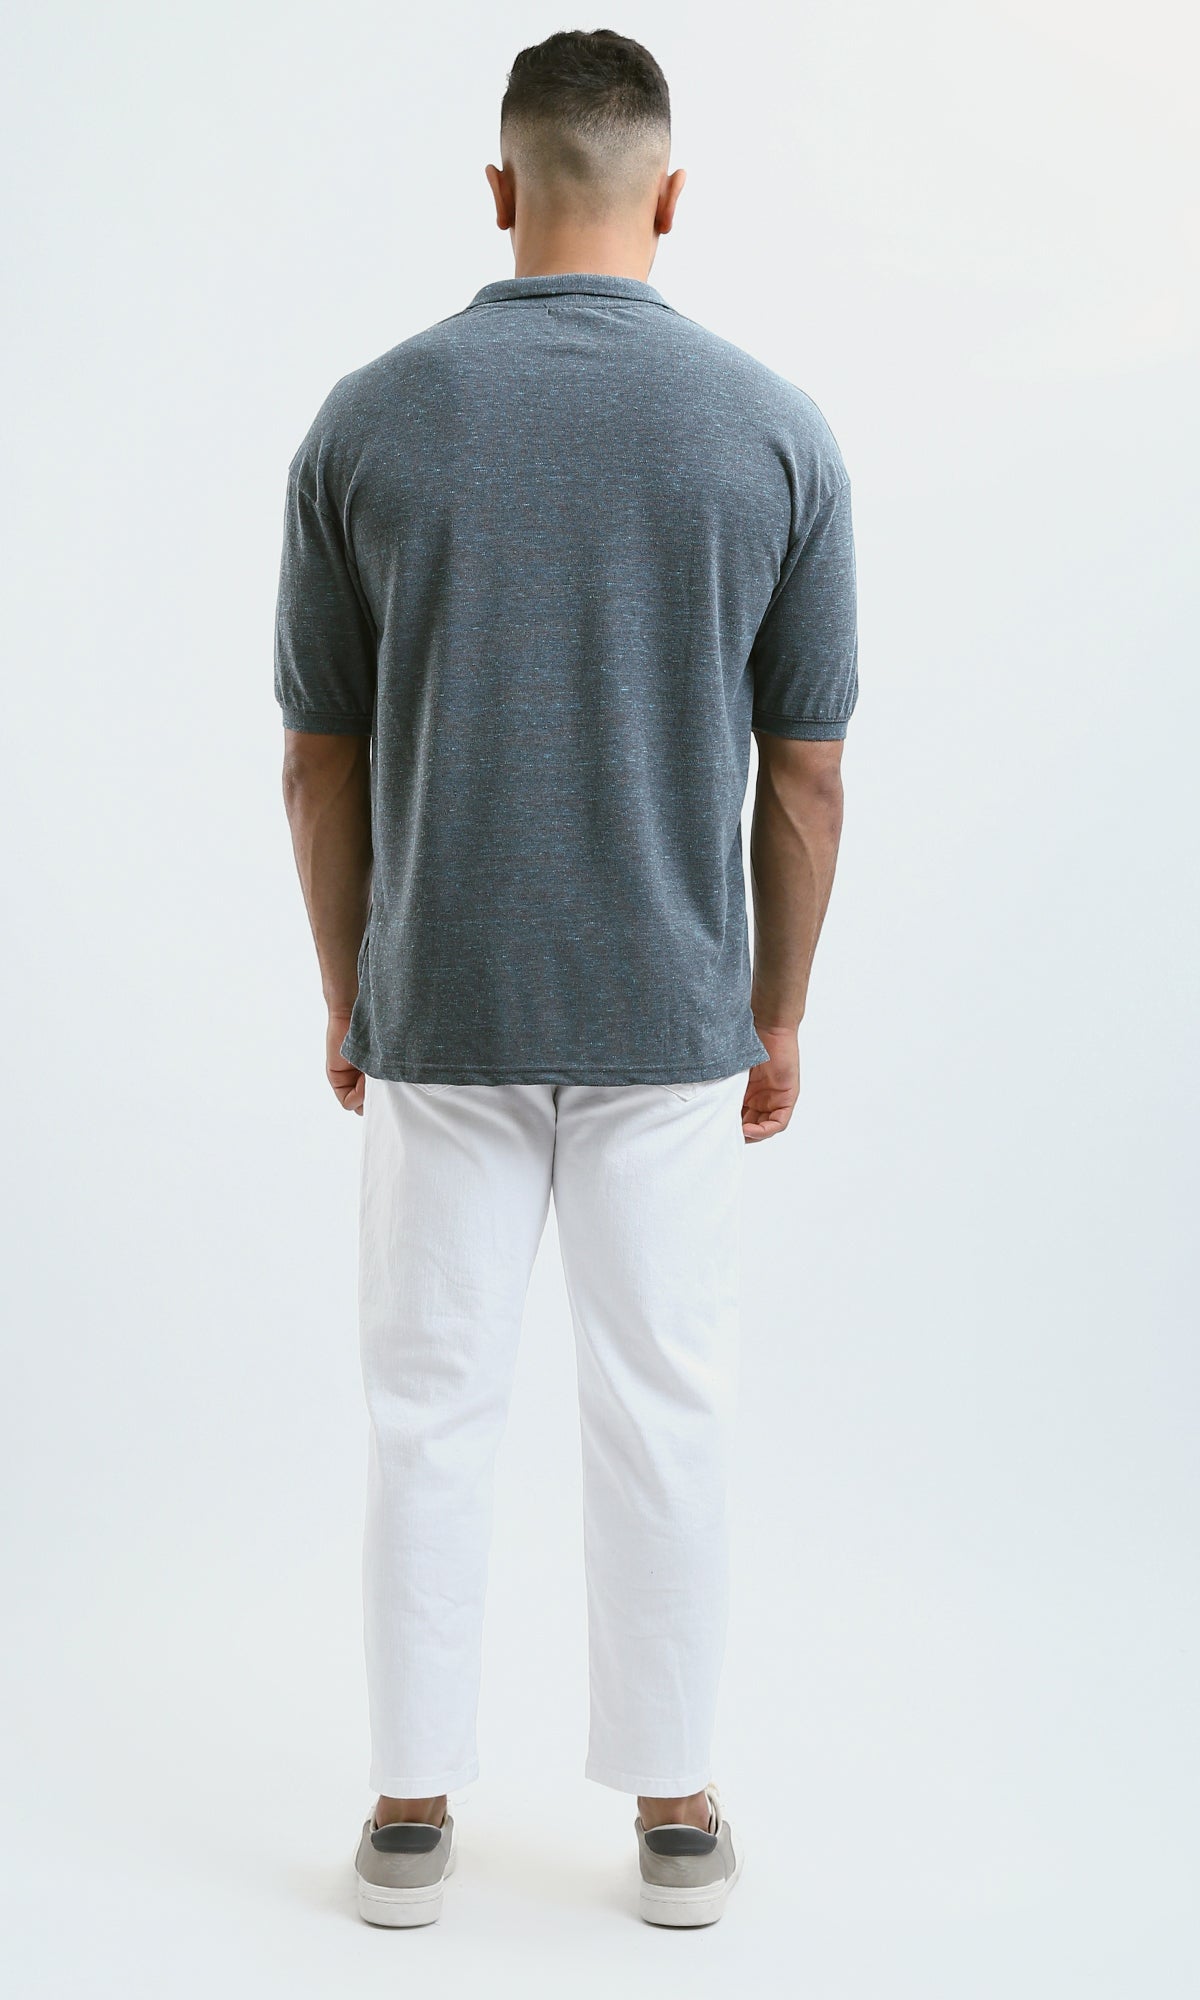 O179241 Short Sleeves Casual Polo Shirt - Heather Dark Grey & Aqua